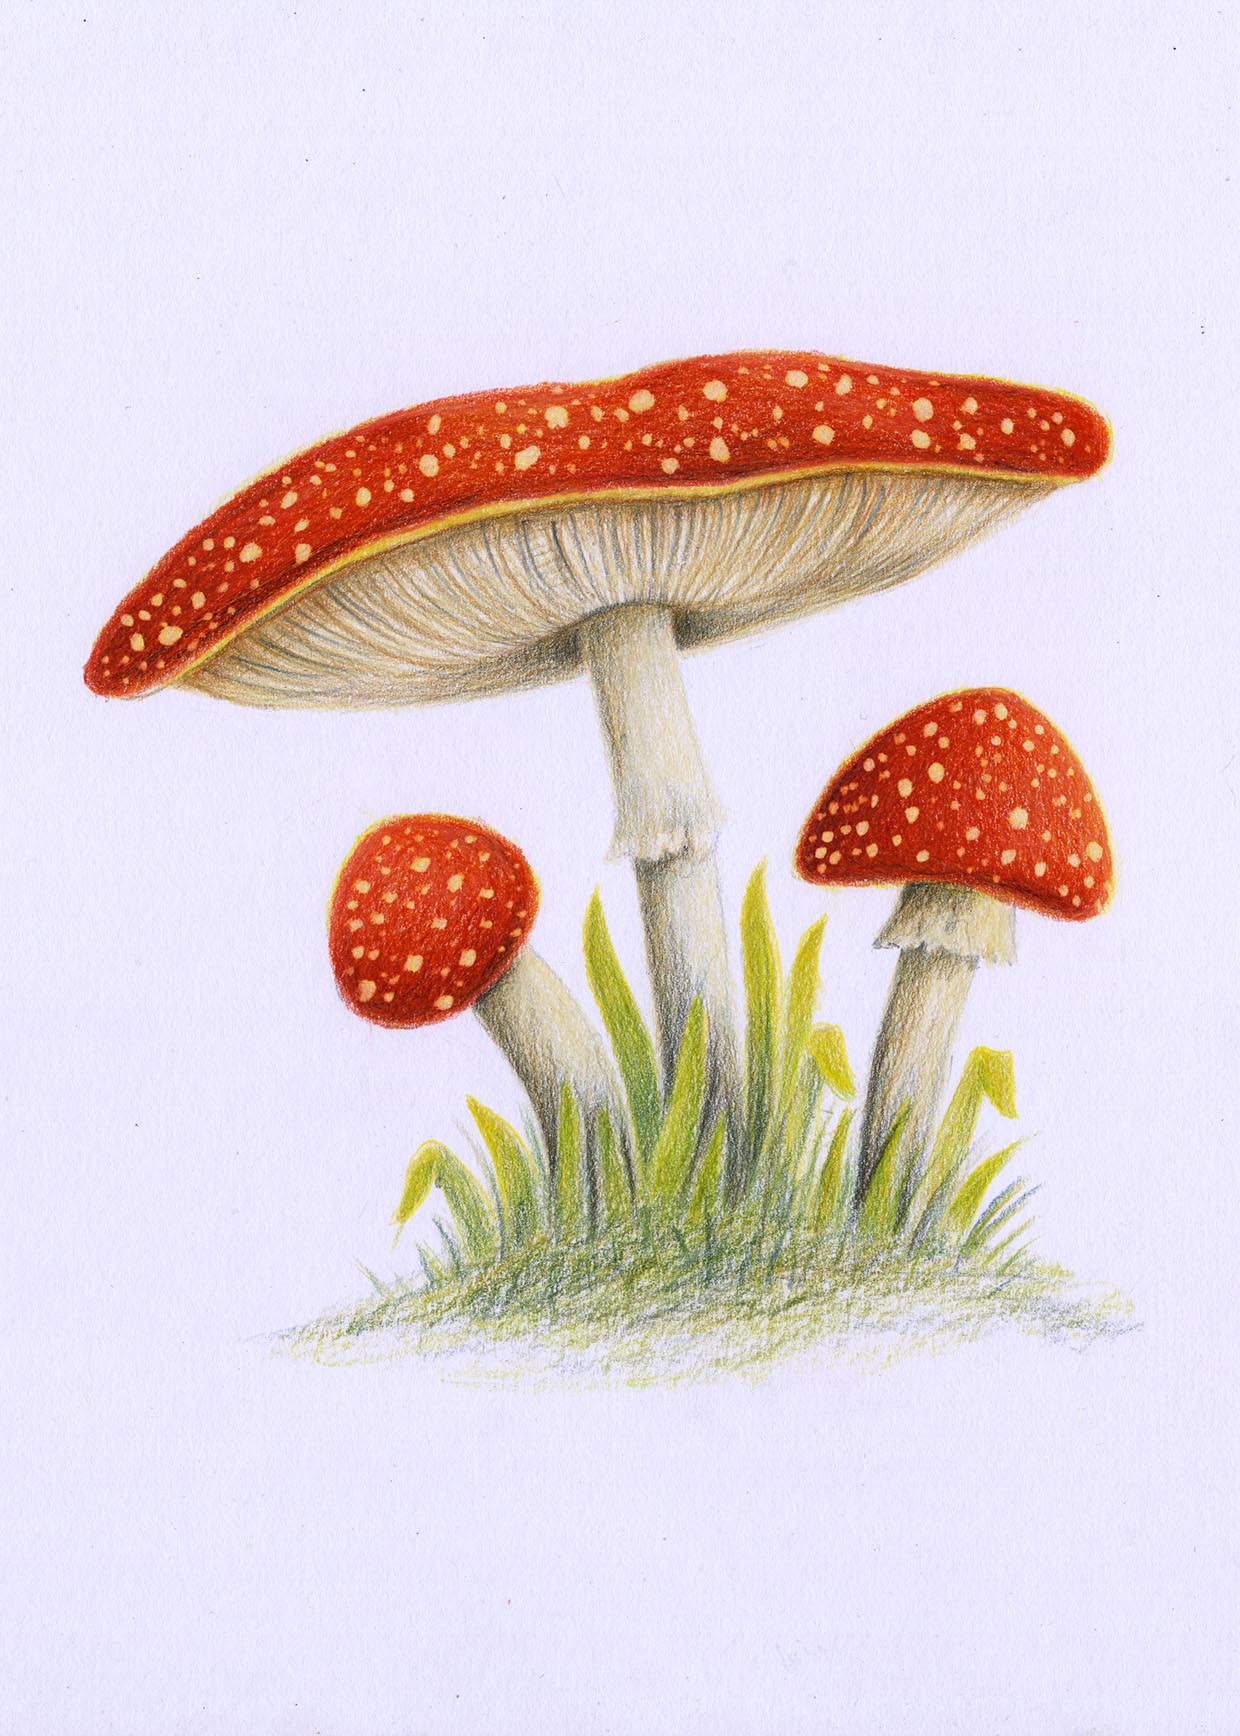 Mushroom Drawing Easy! - The Graphics Fairy